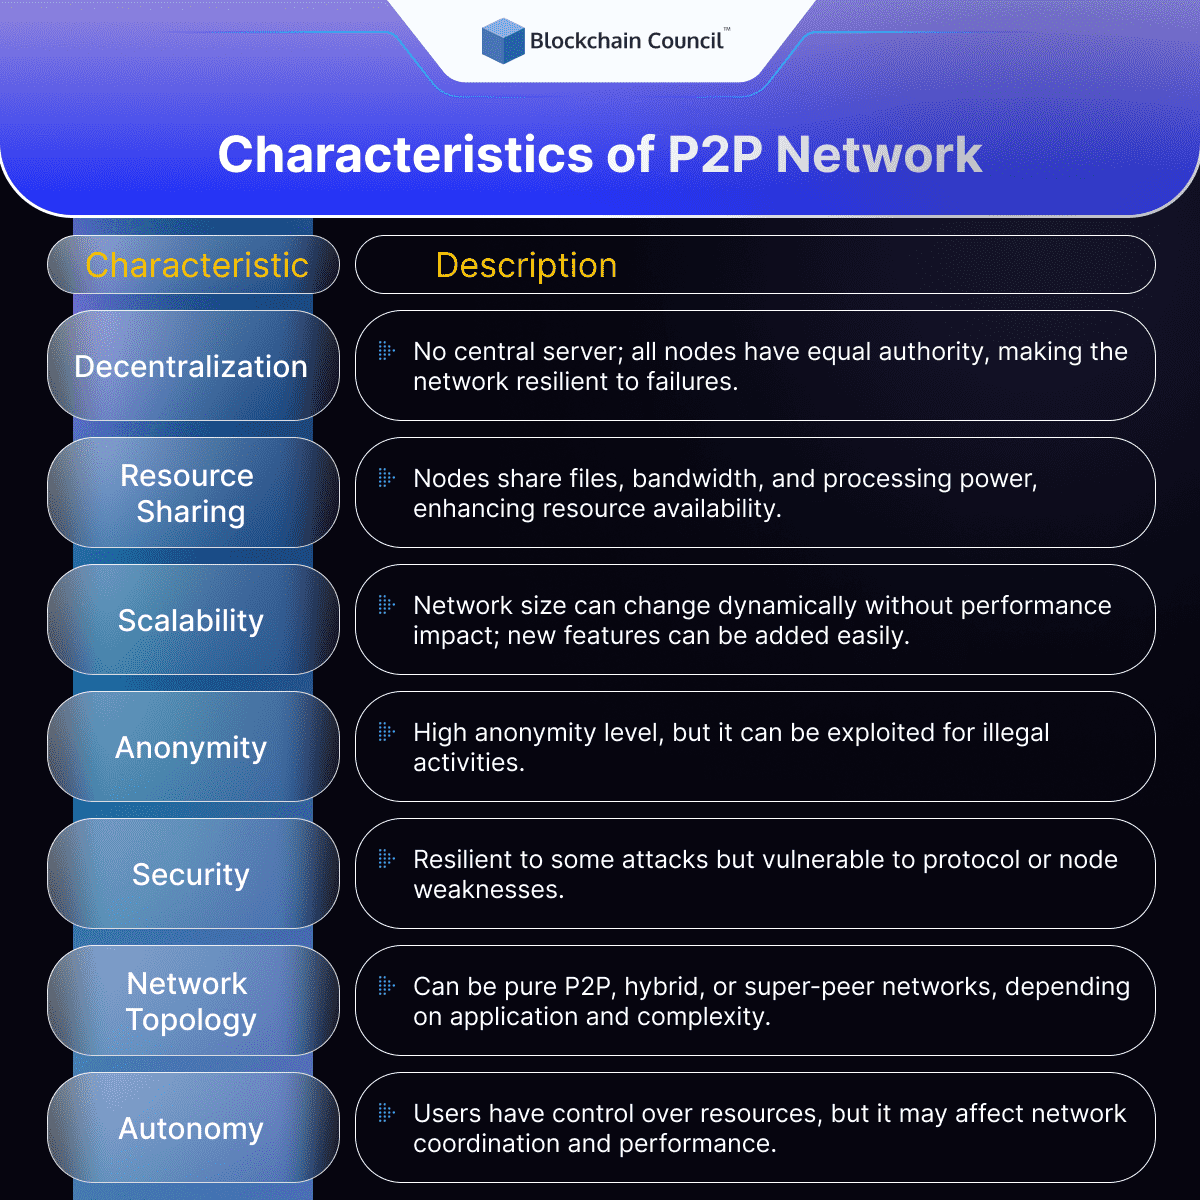 Characteristics of P2P Network